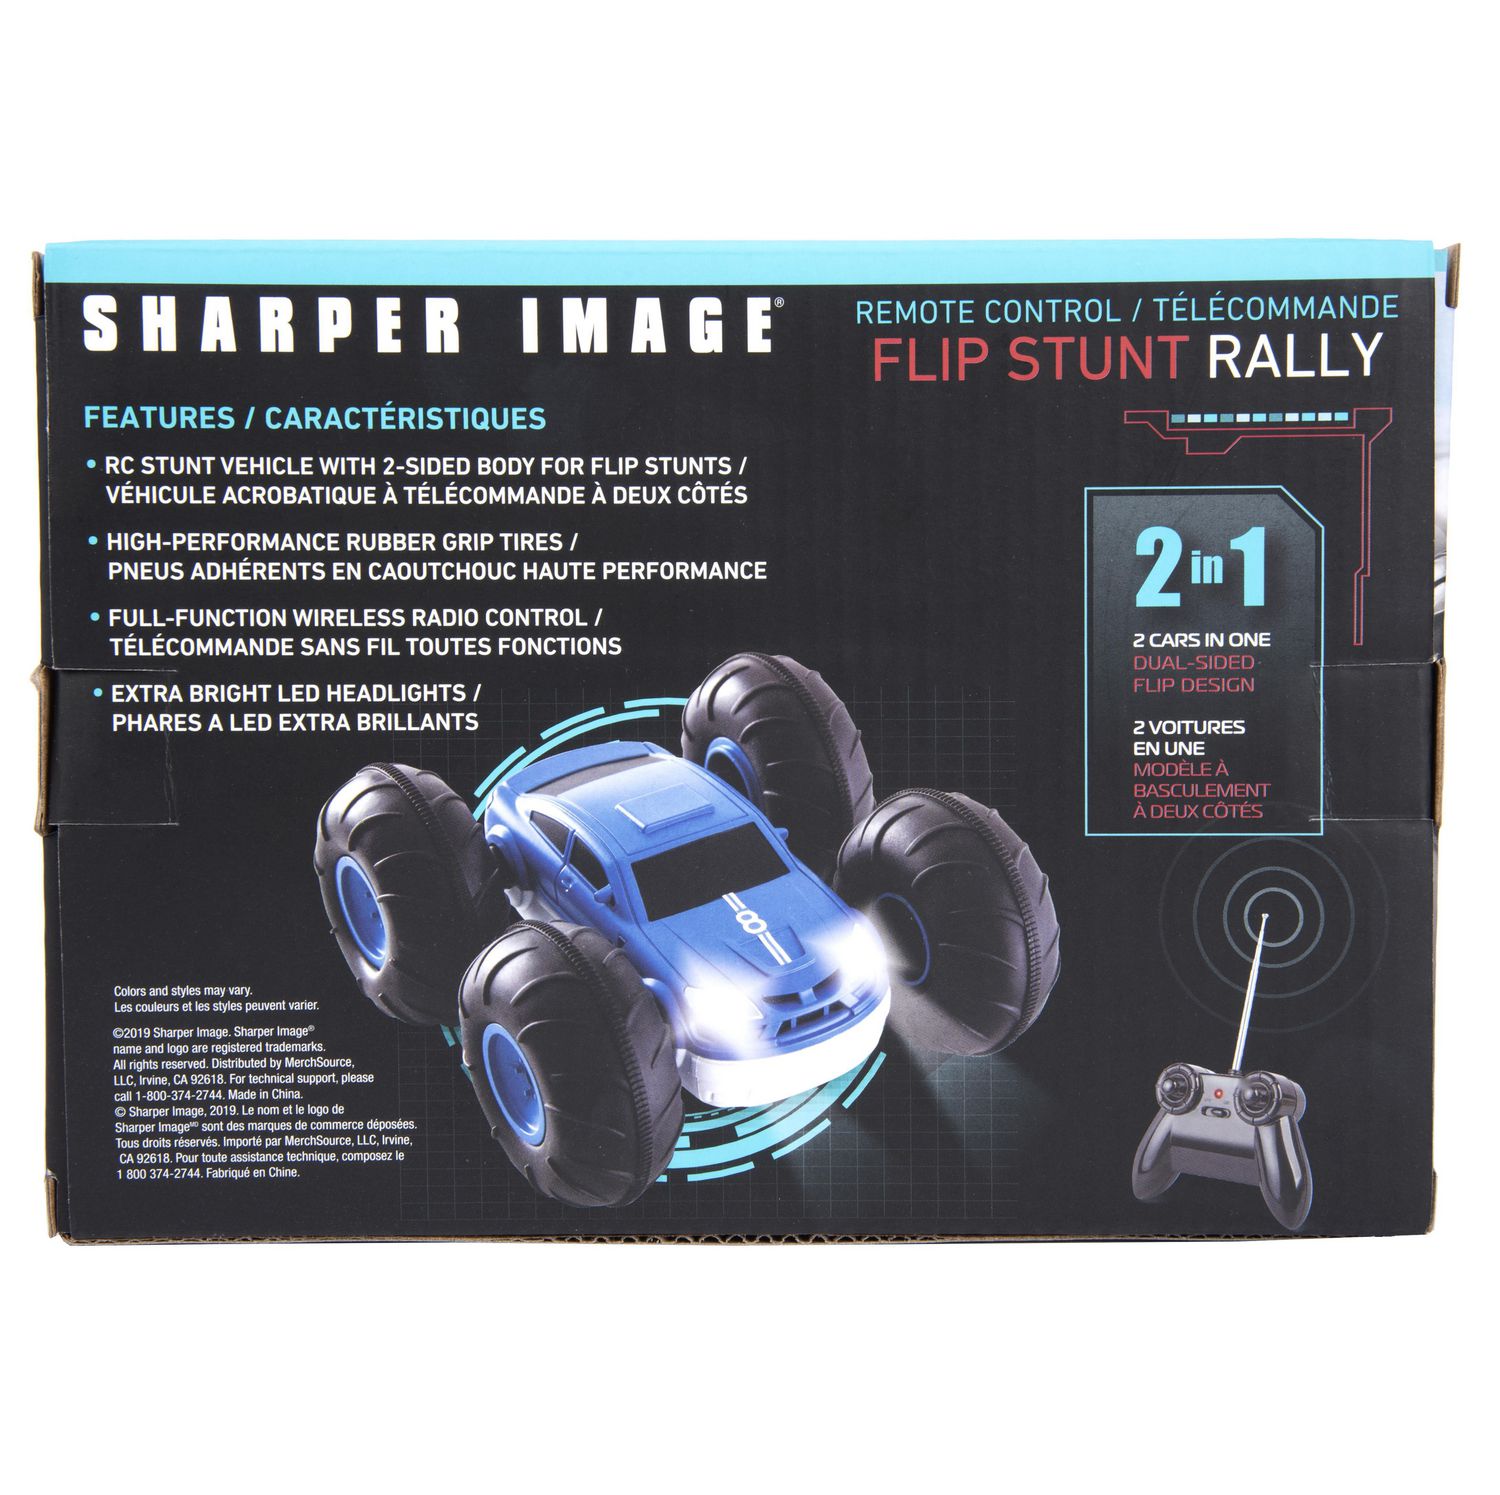 sharper image rally car